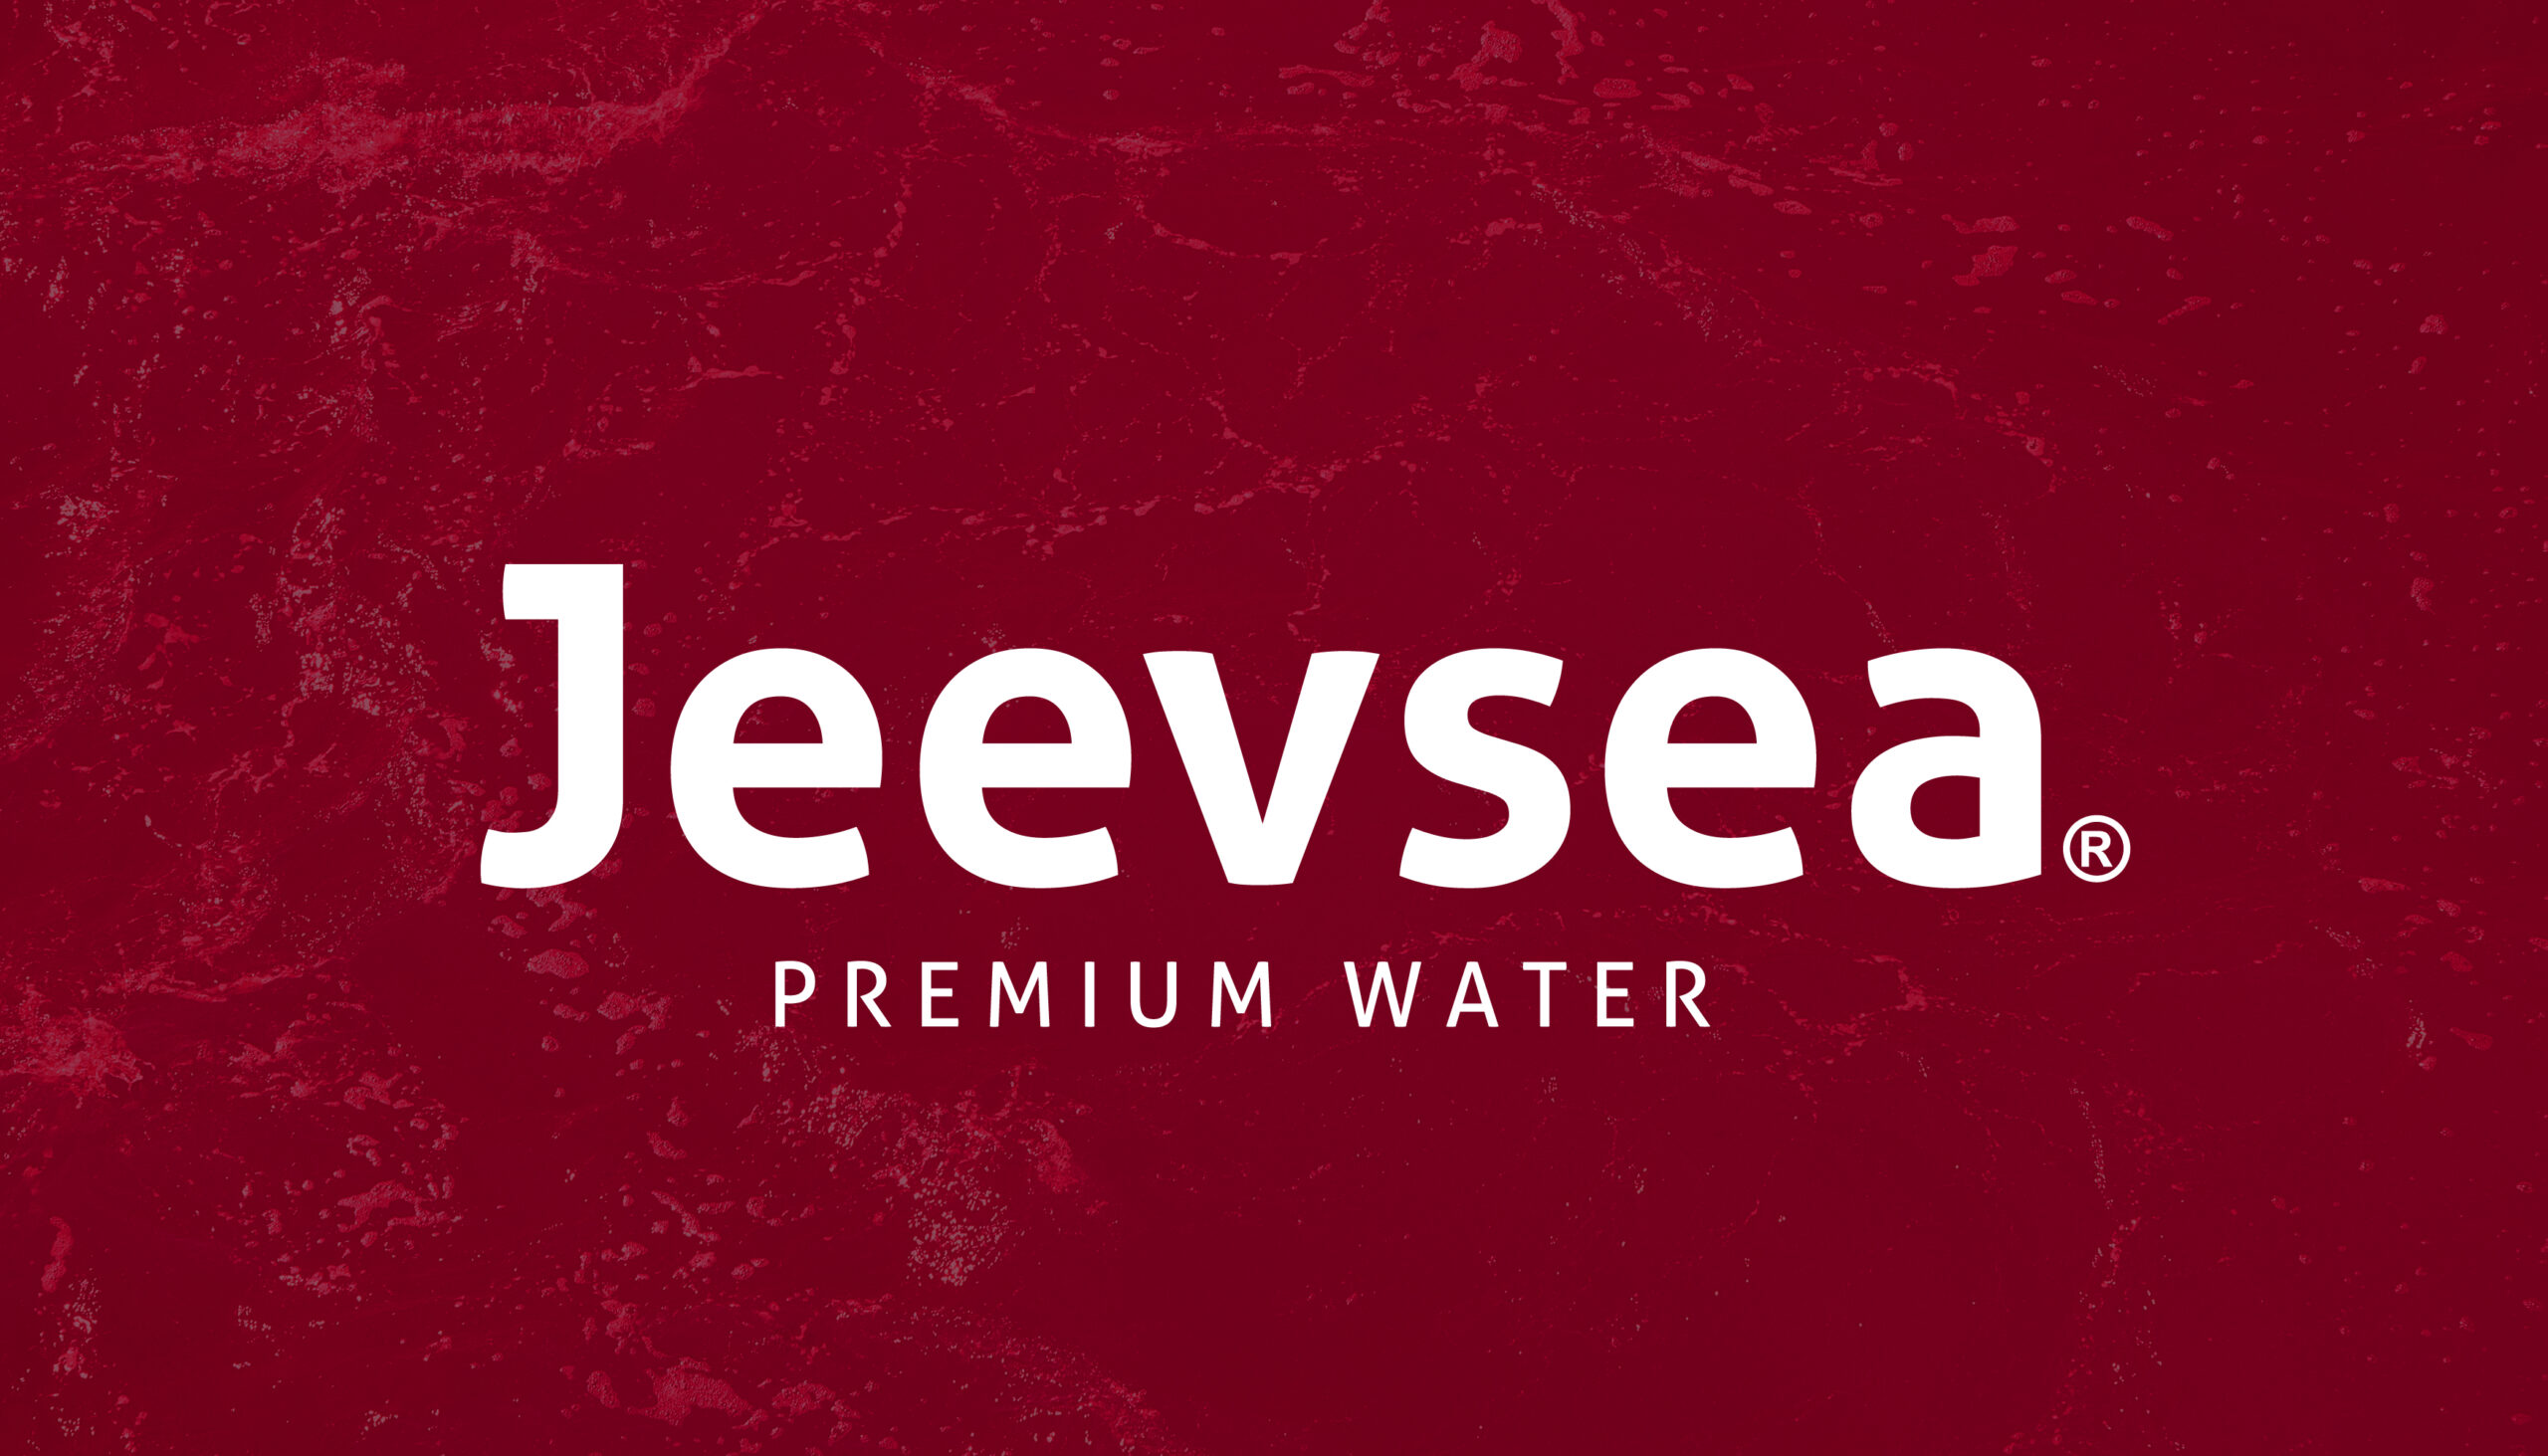 Jeevsea Premium Water